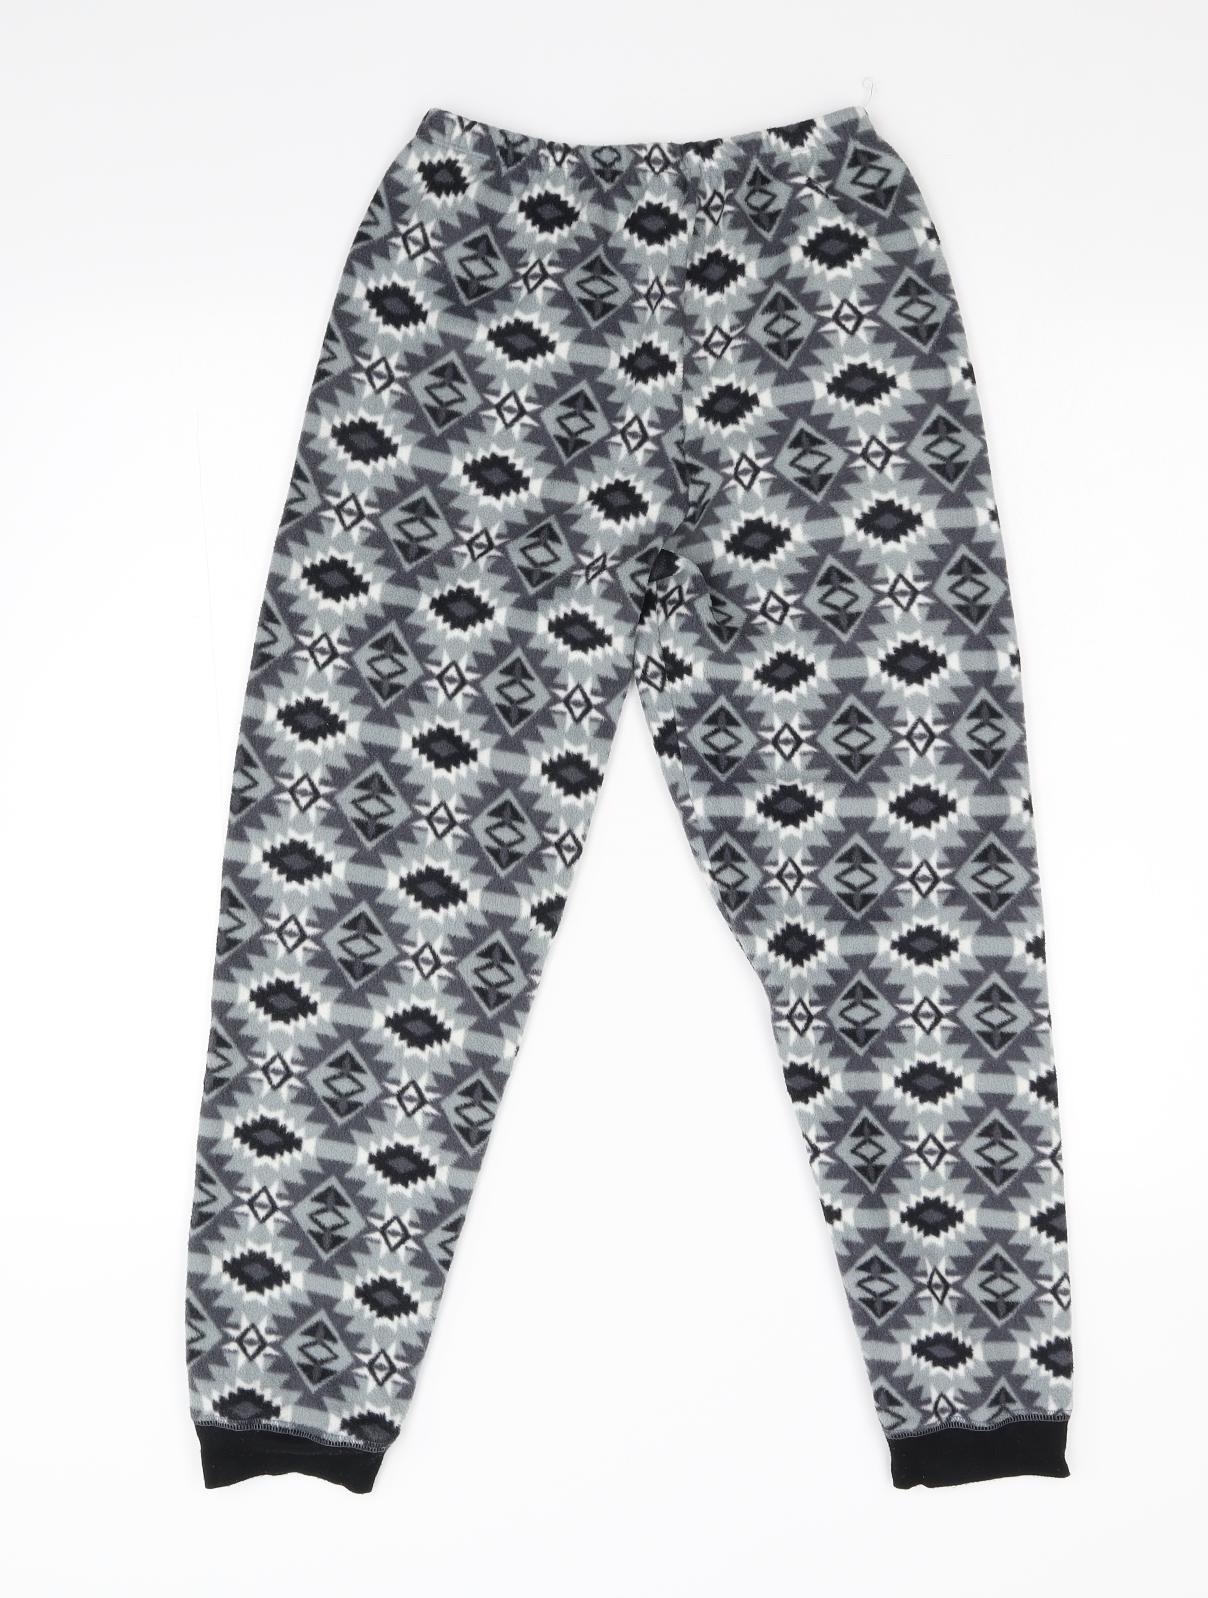 Primark Girls Grey Geometric  Capri Pyjama Pants Size 11-12 Years